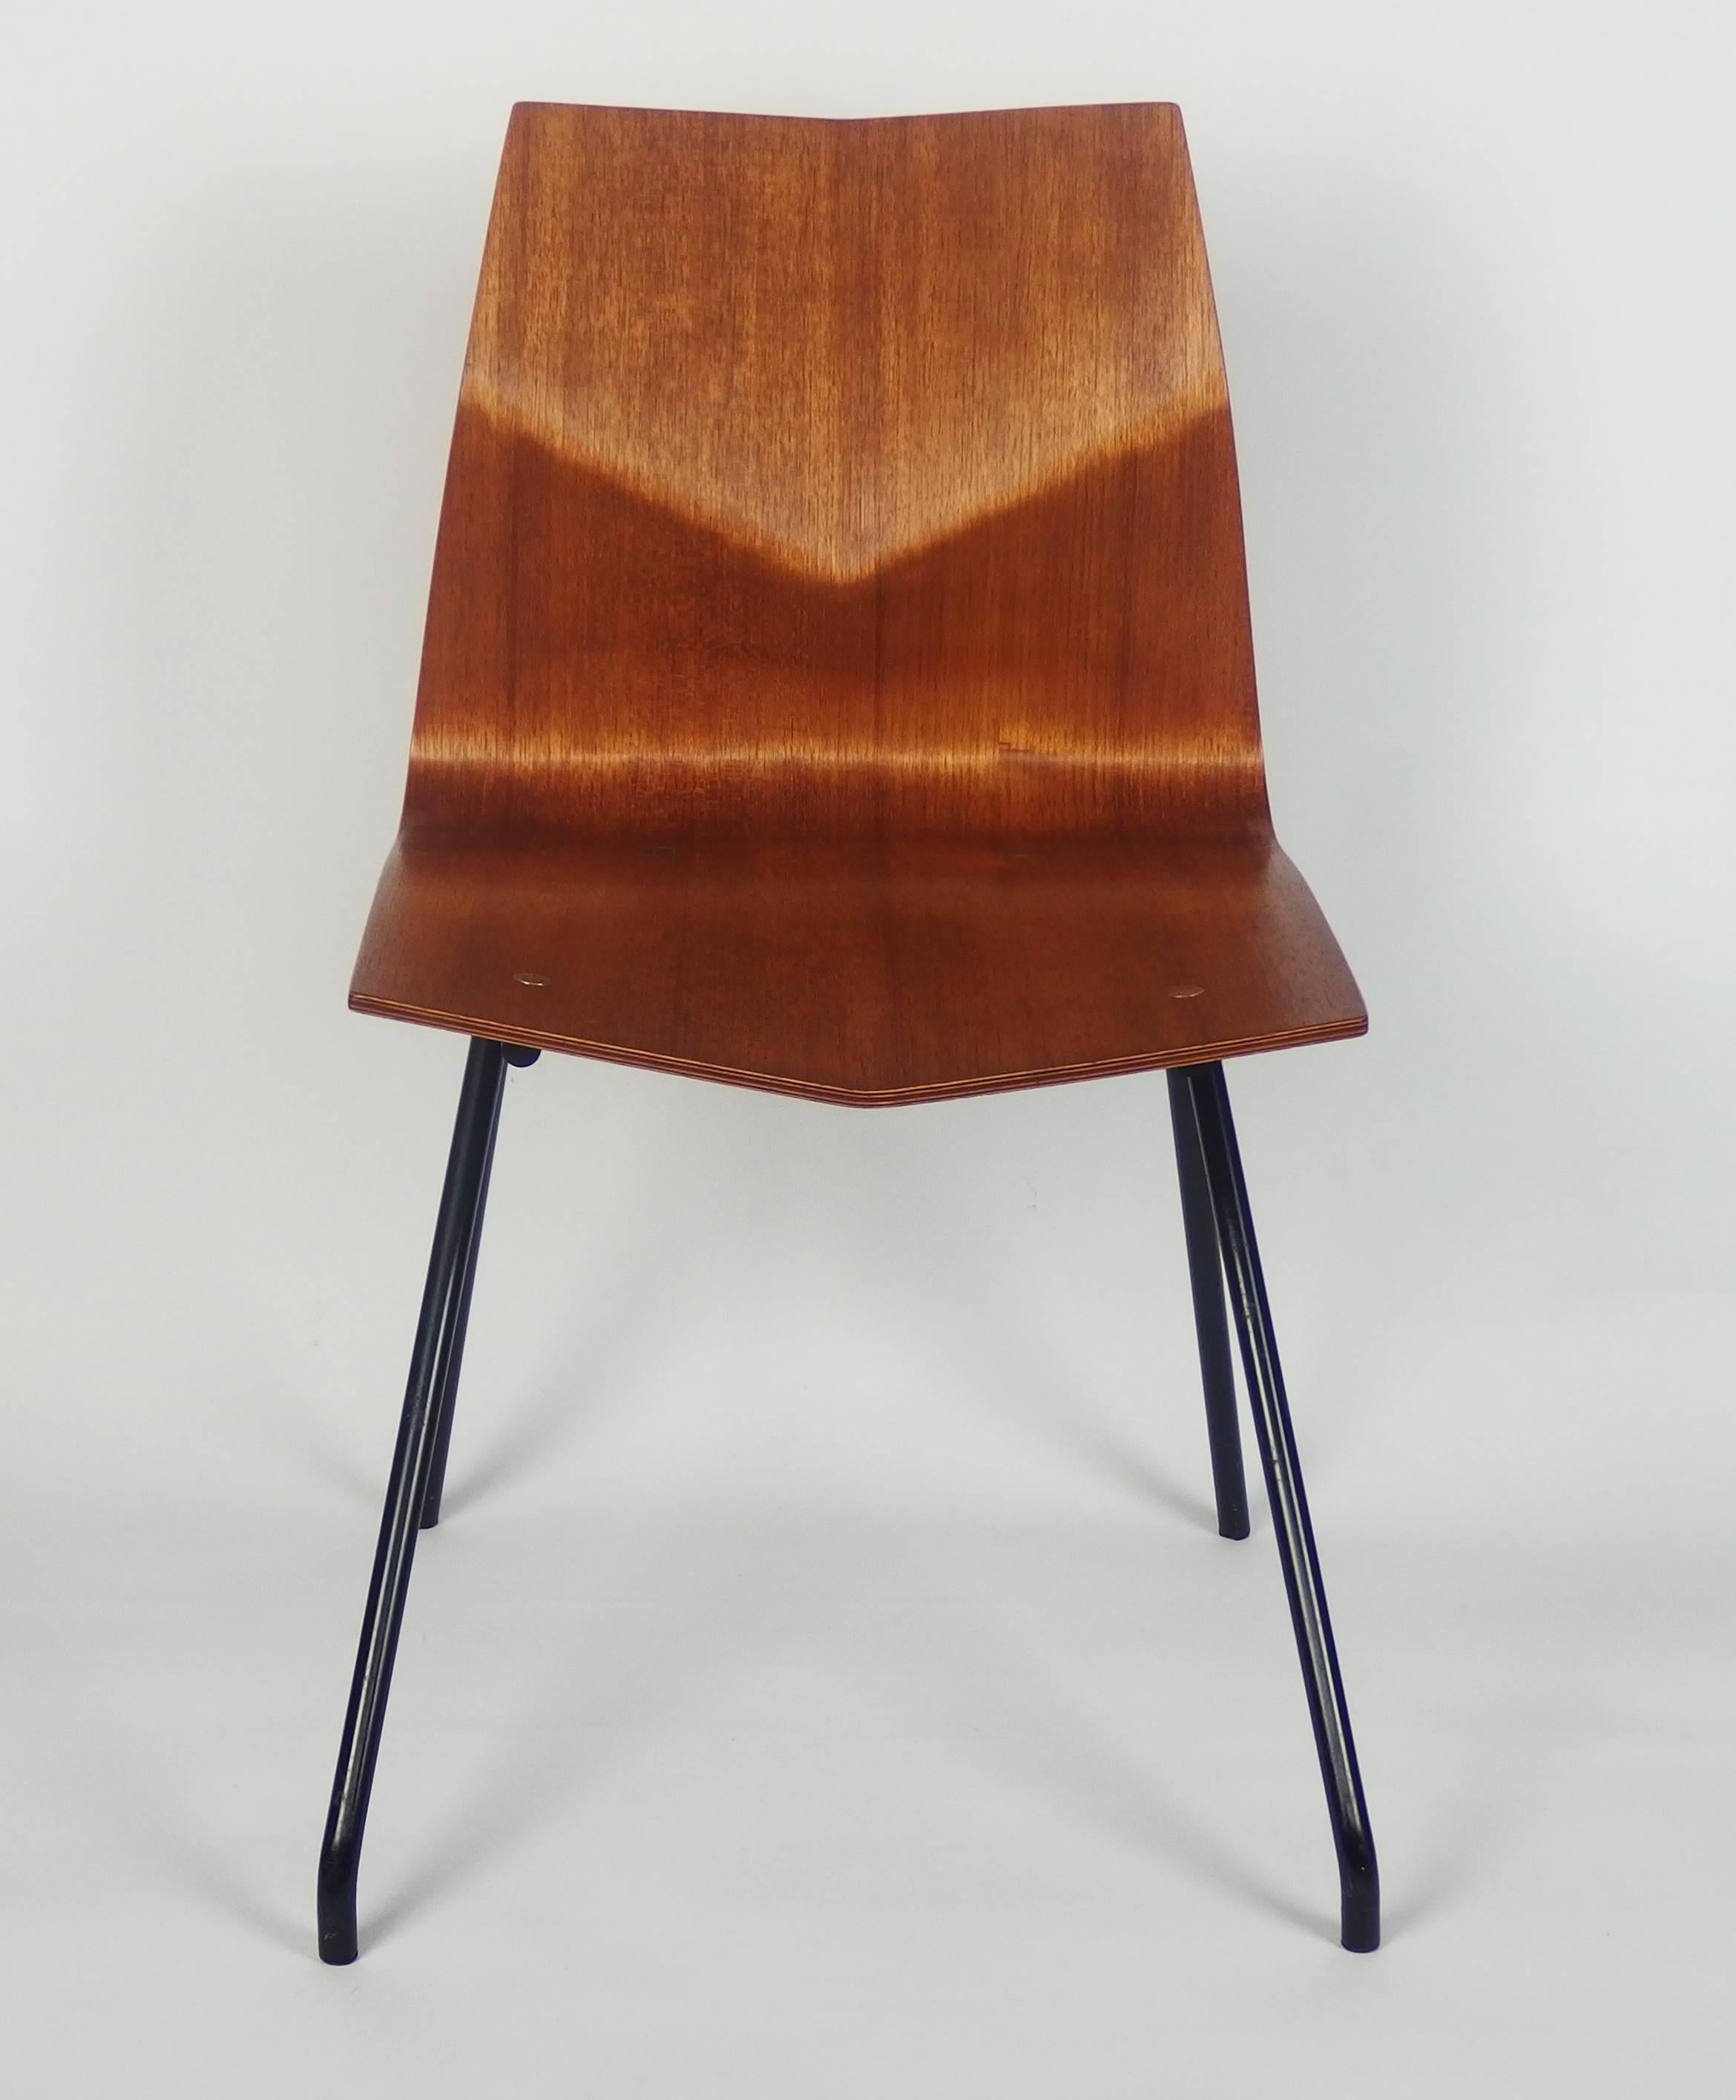 A plywood mahogany veneered chair with black enameled tubular metal feet.